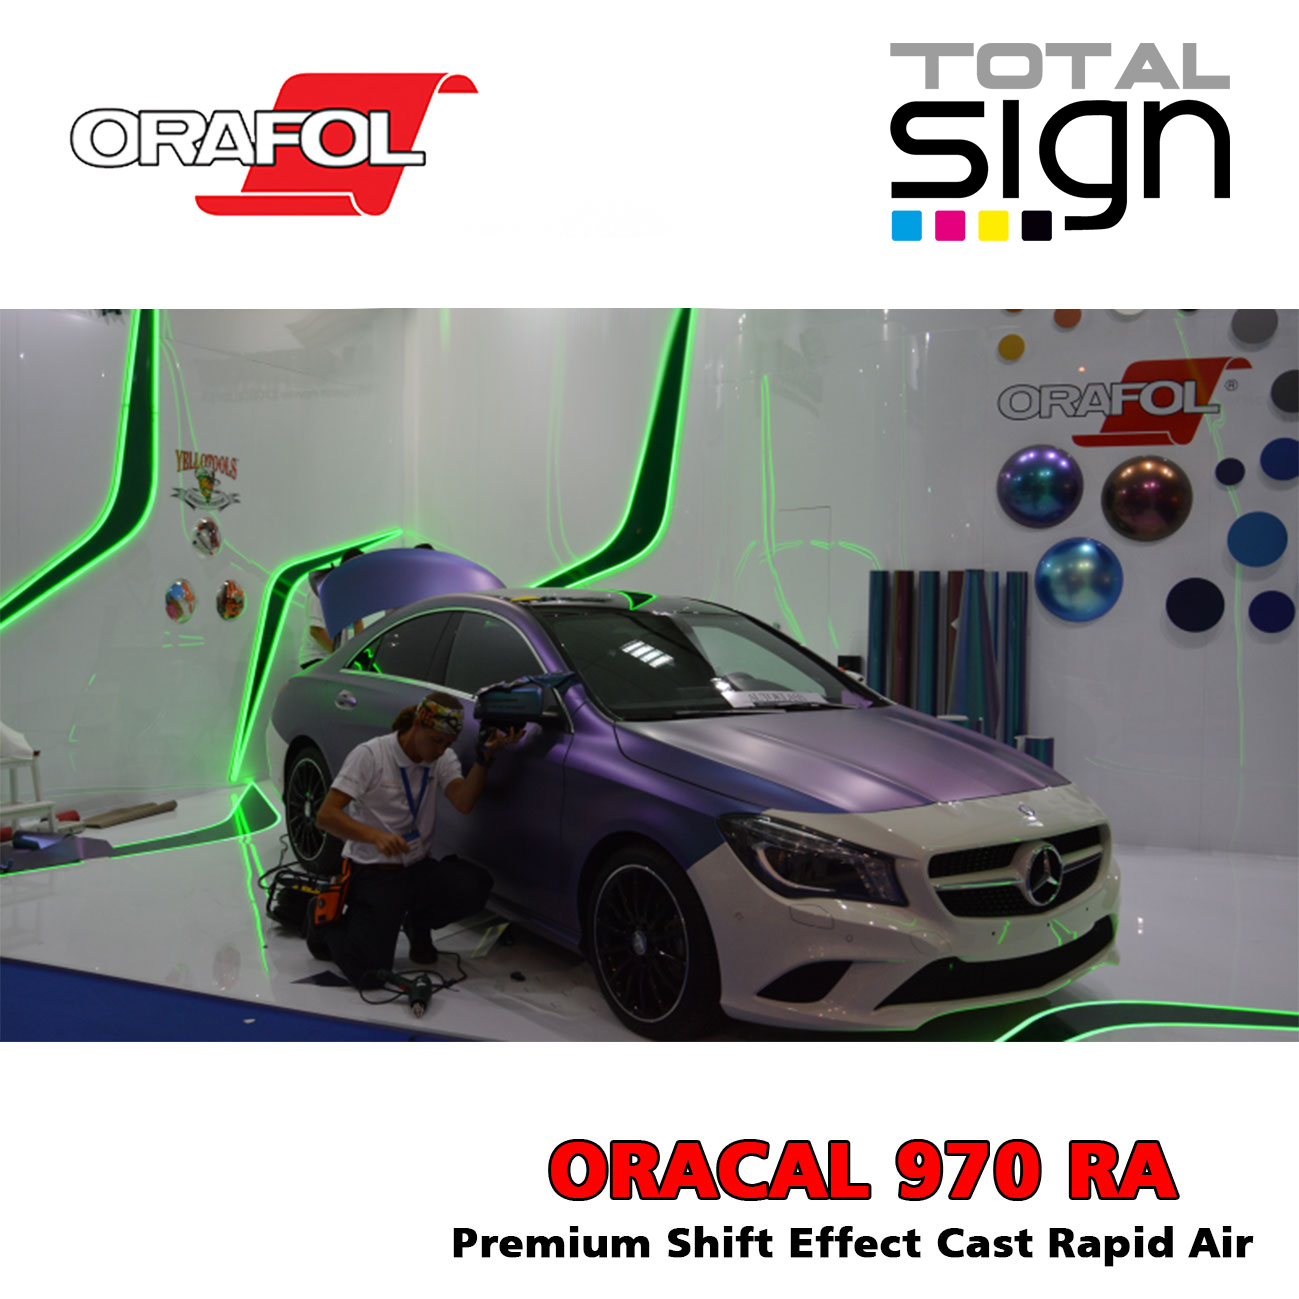 Oracal 970RA Premium Shift Autofolie gegossen | Rapid Air Premium Wrapping  Cast Folie